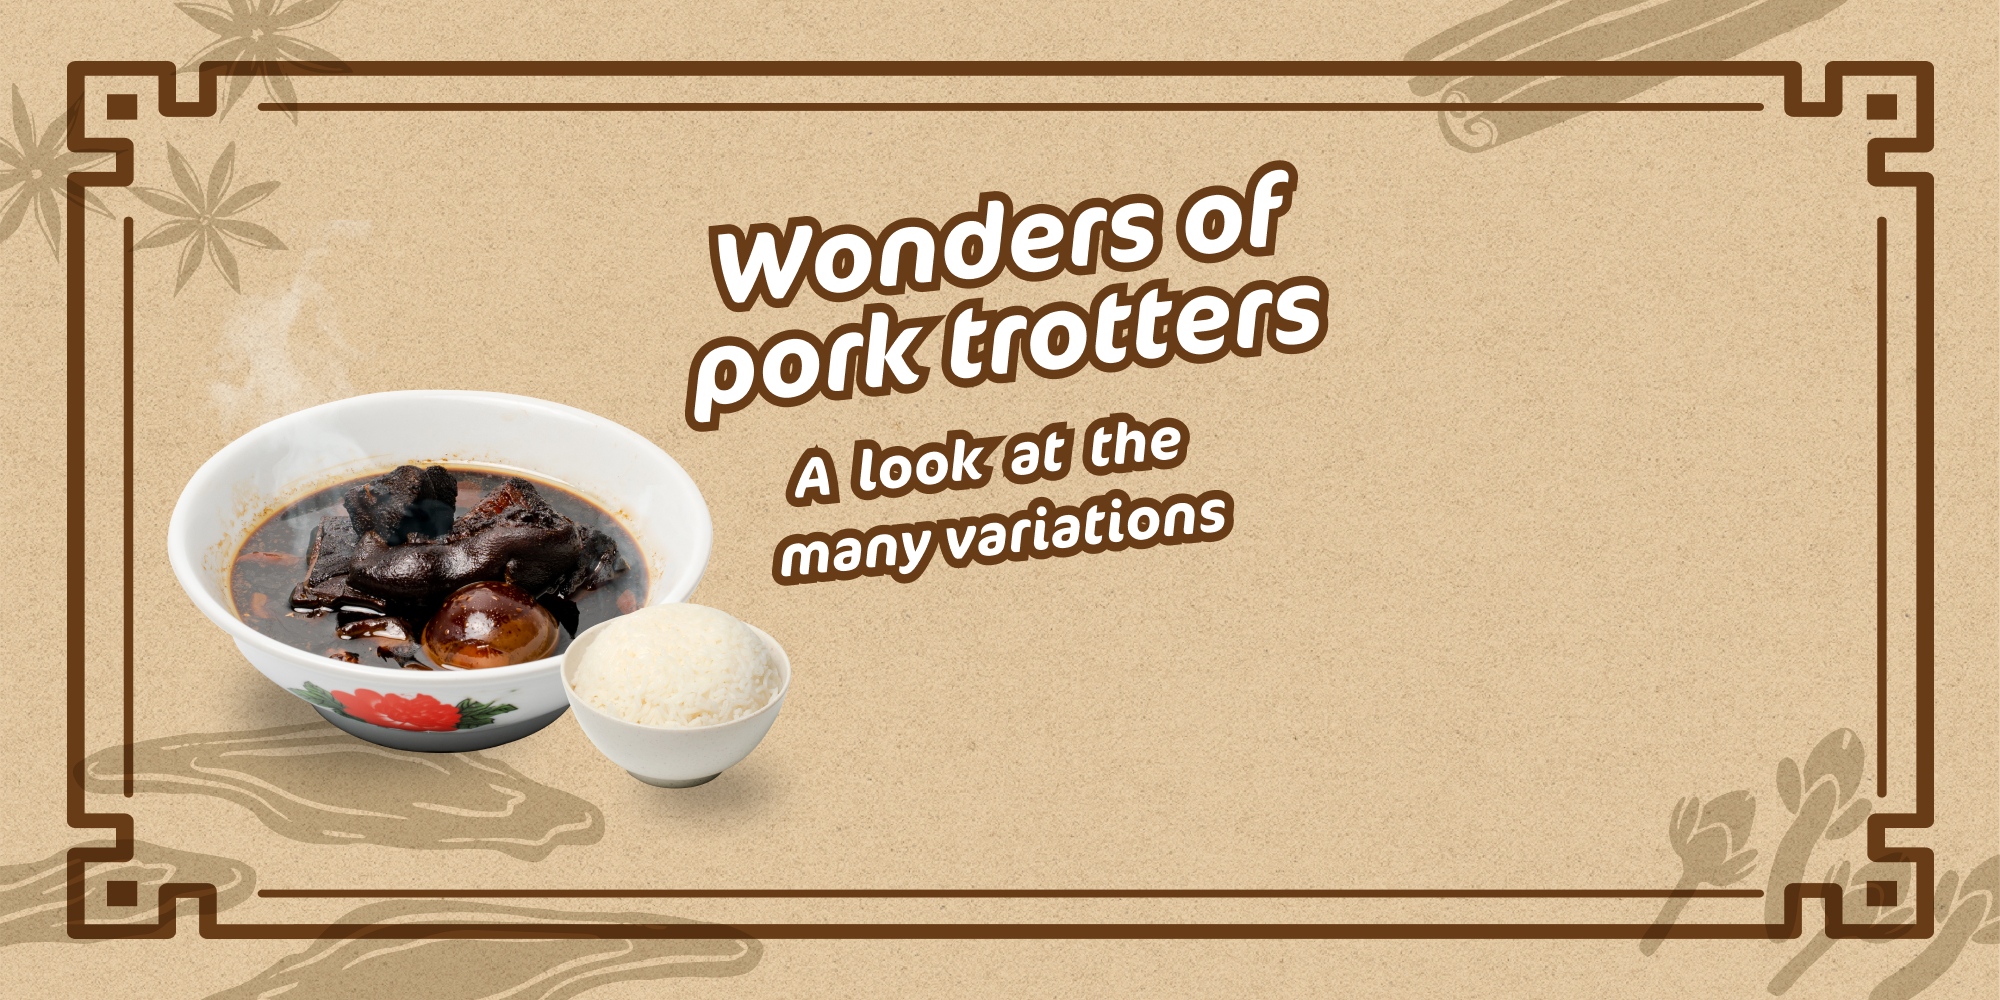 wonders-of-pork-trotters-look-at-many-variations